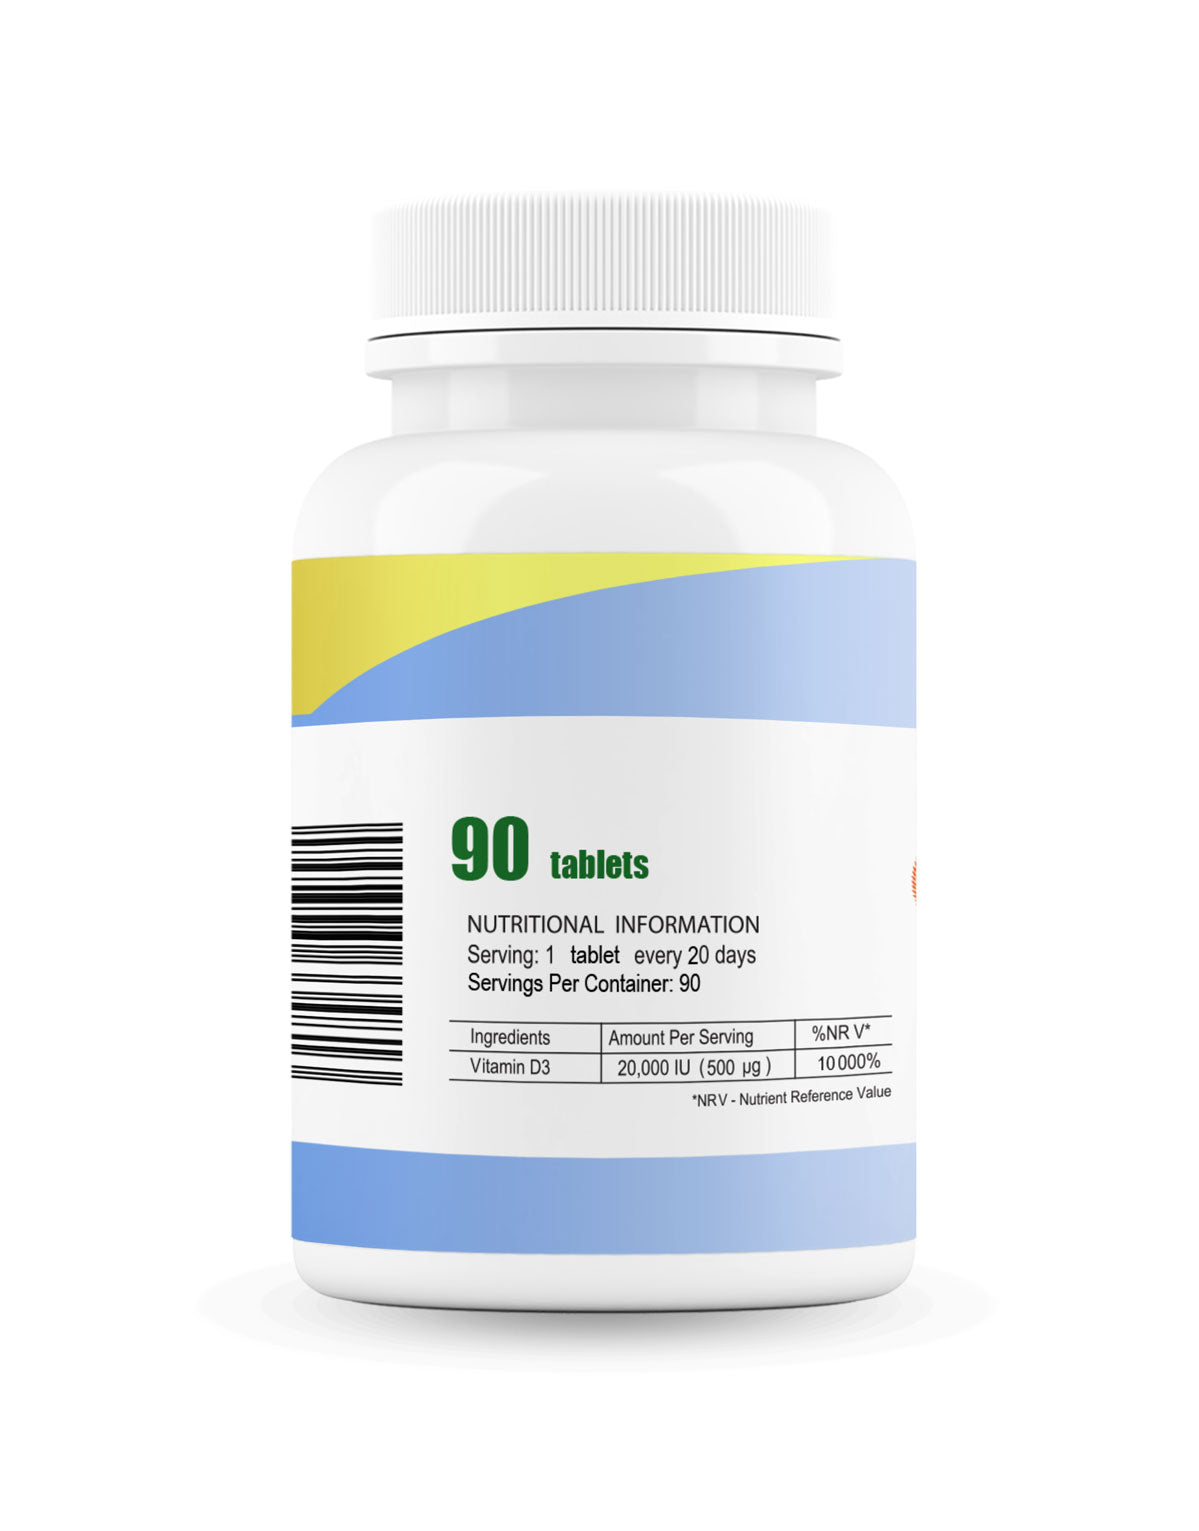 2 X Vitamin D3 20000I.E 180 Tabletten